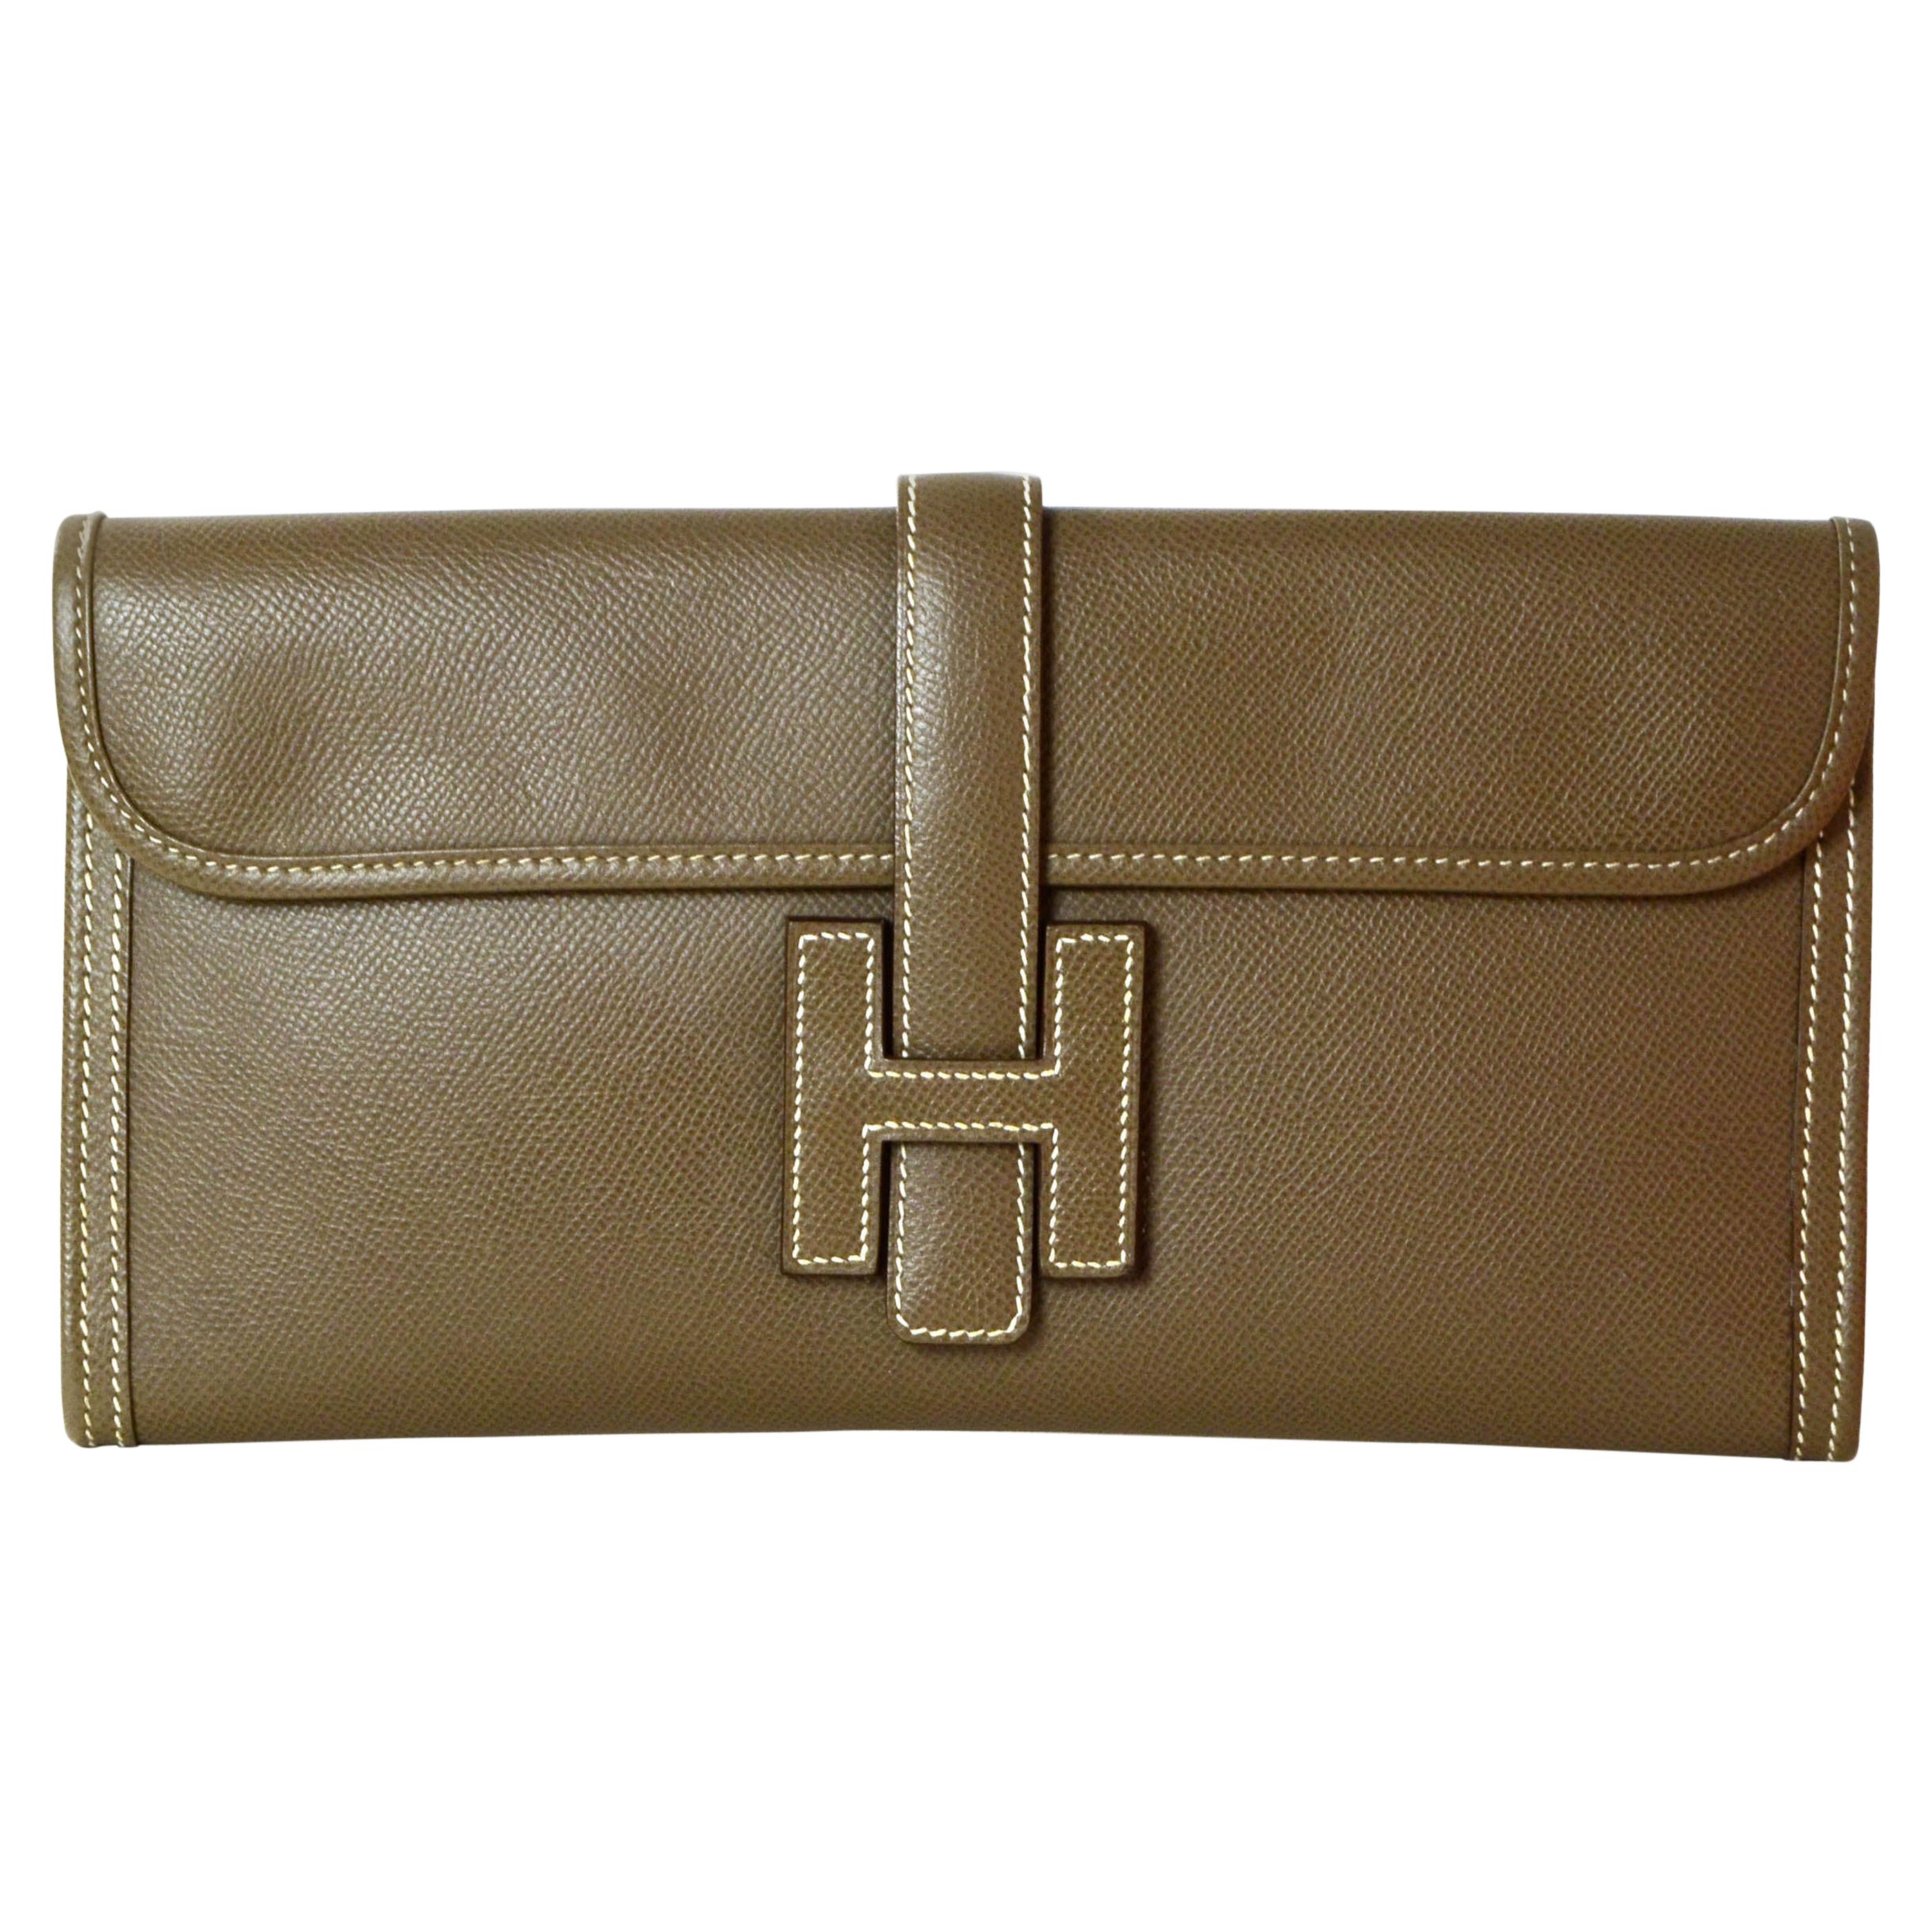 Hermes Etoupe Epsom Leather Jige Elan 29 H Clutch Bag rt. $3, 525